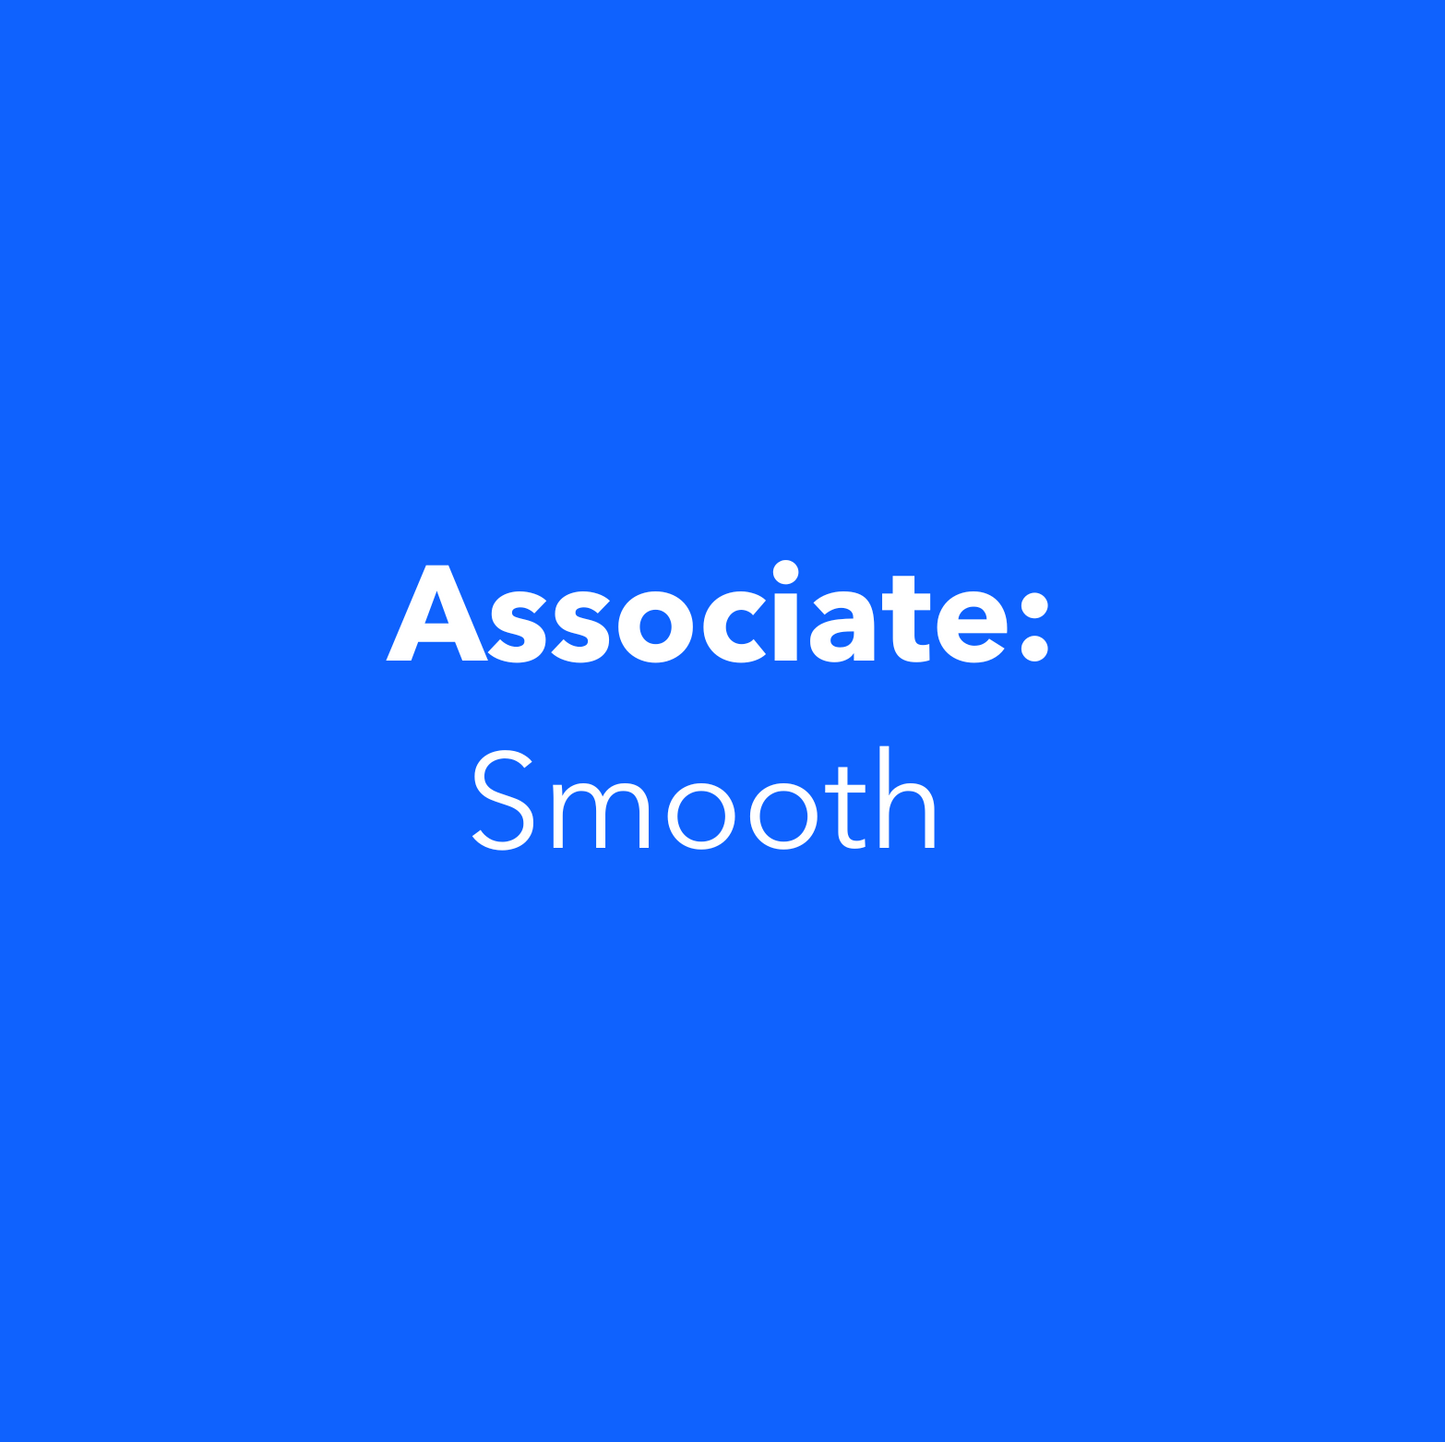 Associate: Smooth